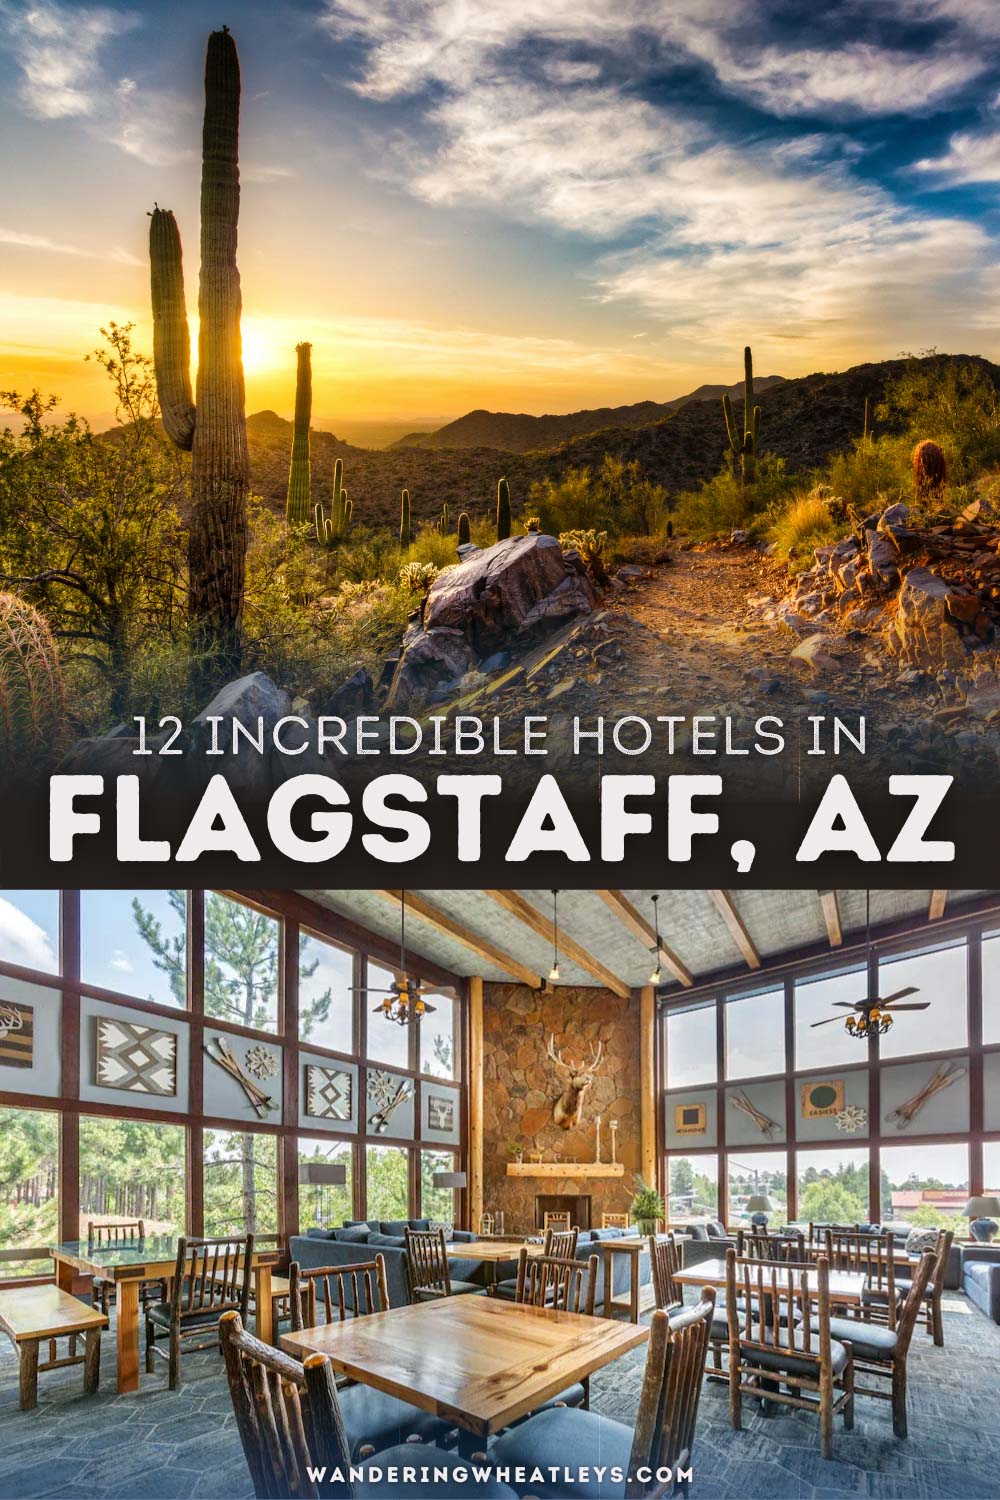 The Best Hotels in Flagstaff, Arizona